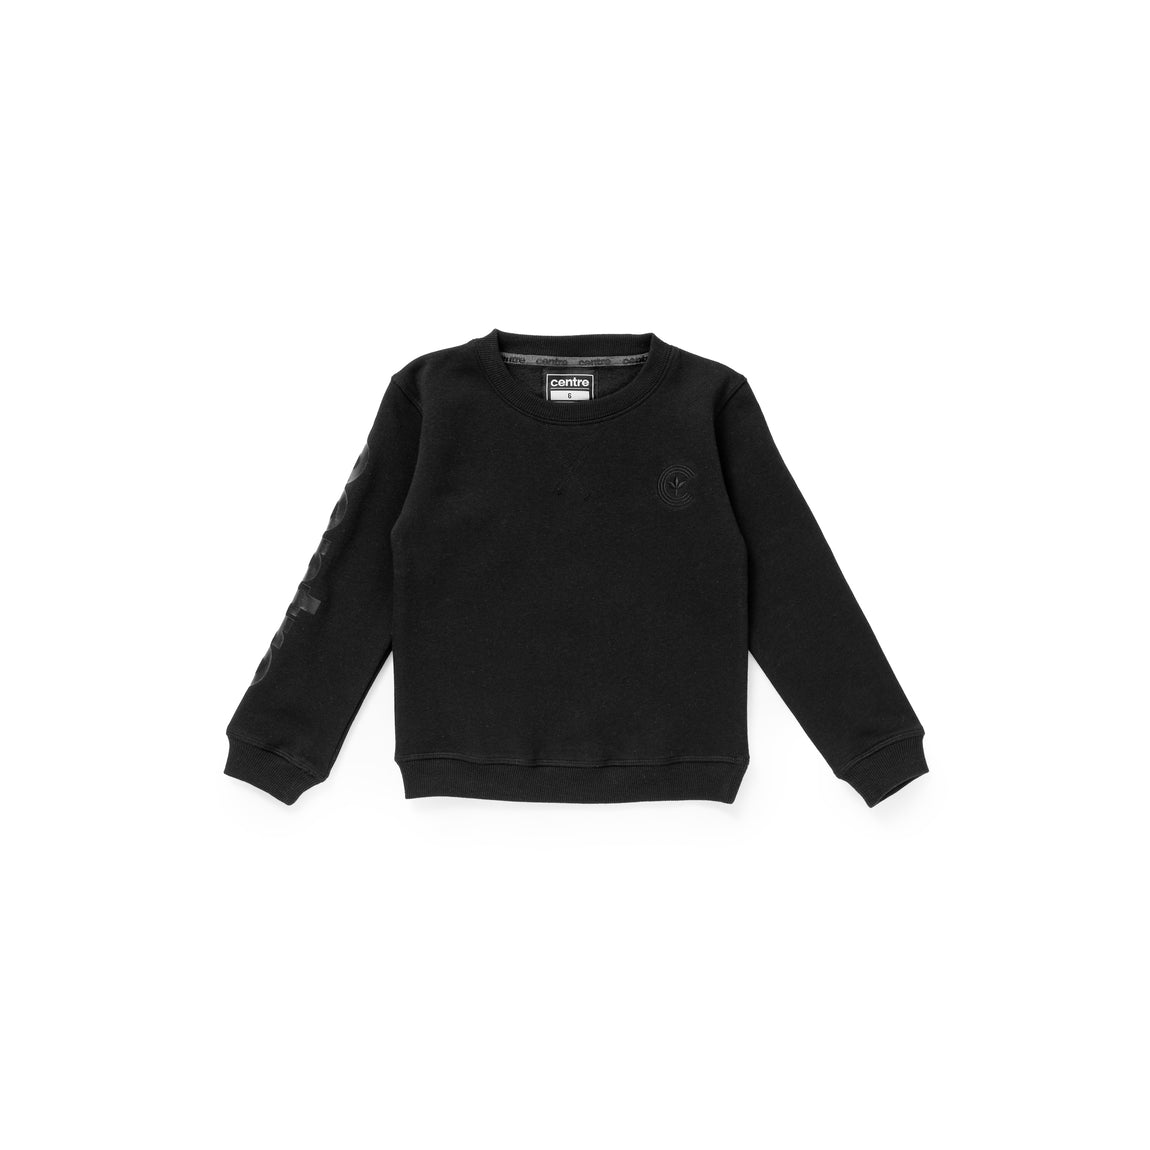 Centre Kids Crewneck Sweater (Black) - Centre Kids Crewneck Sweater (Black) - 